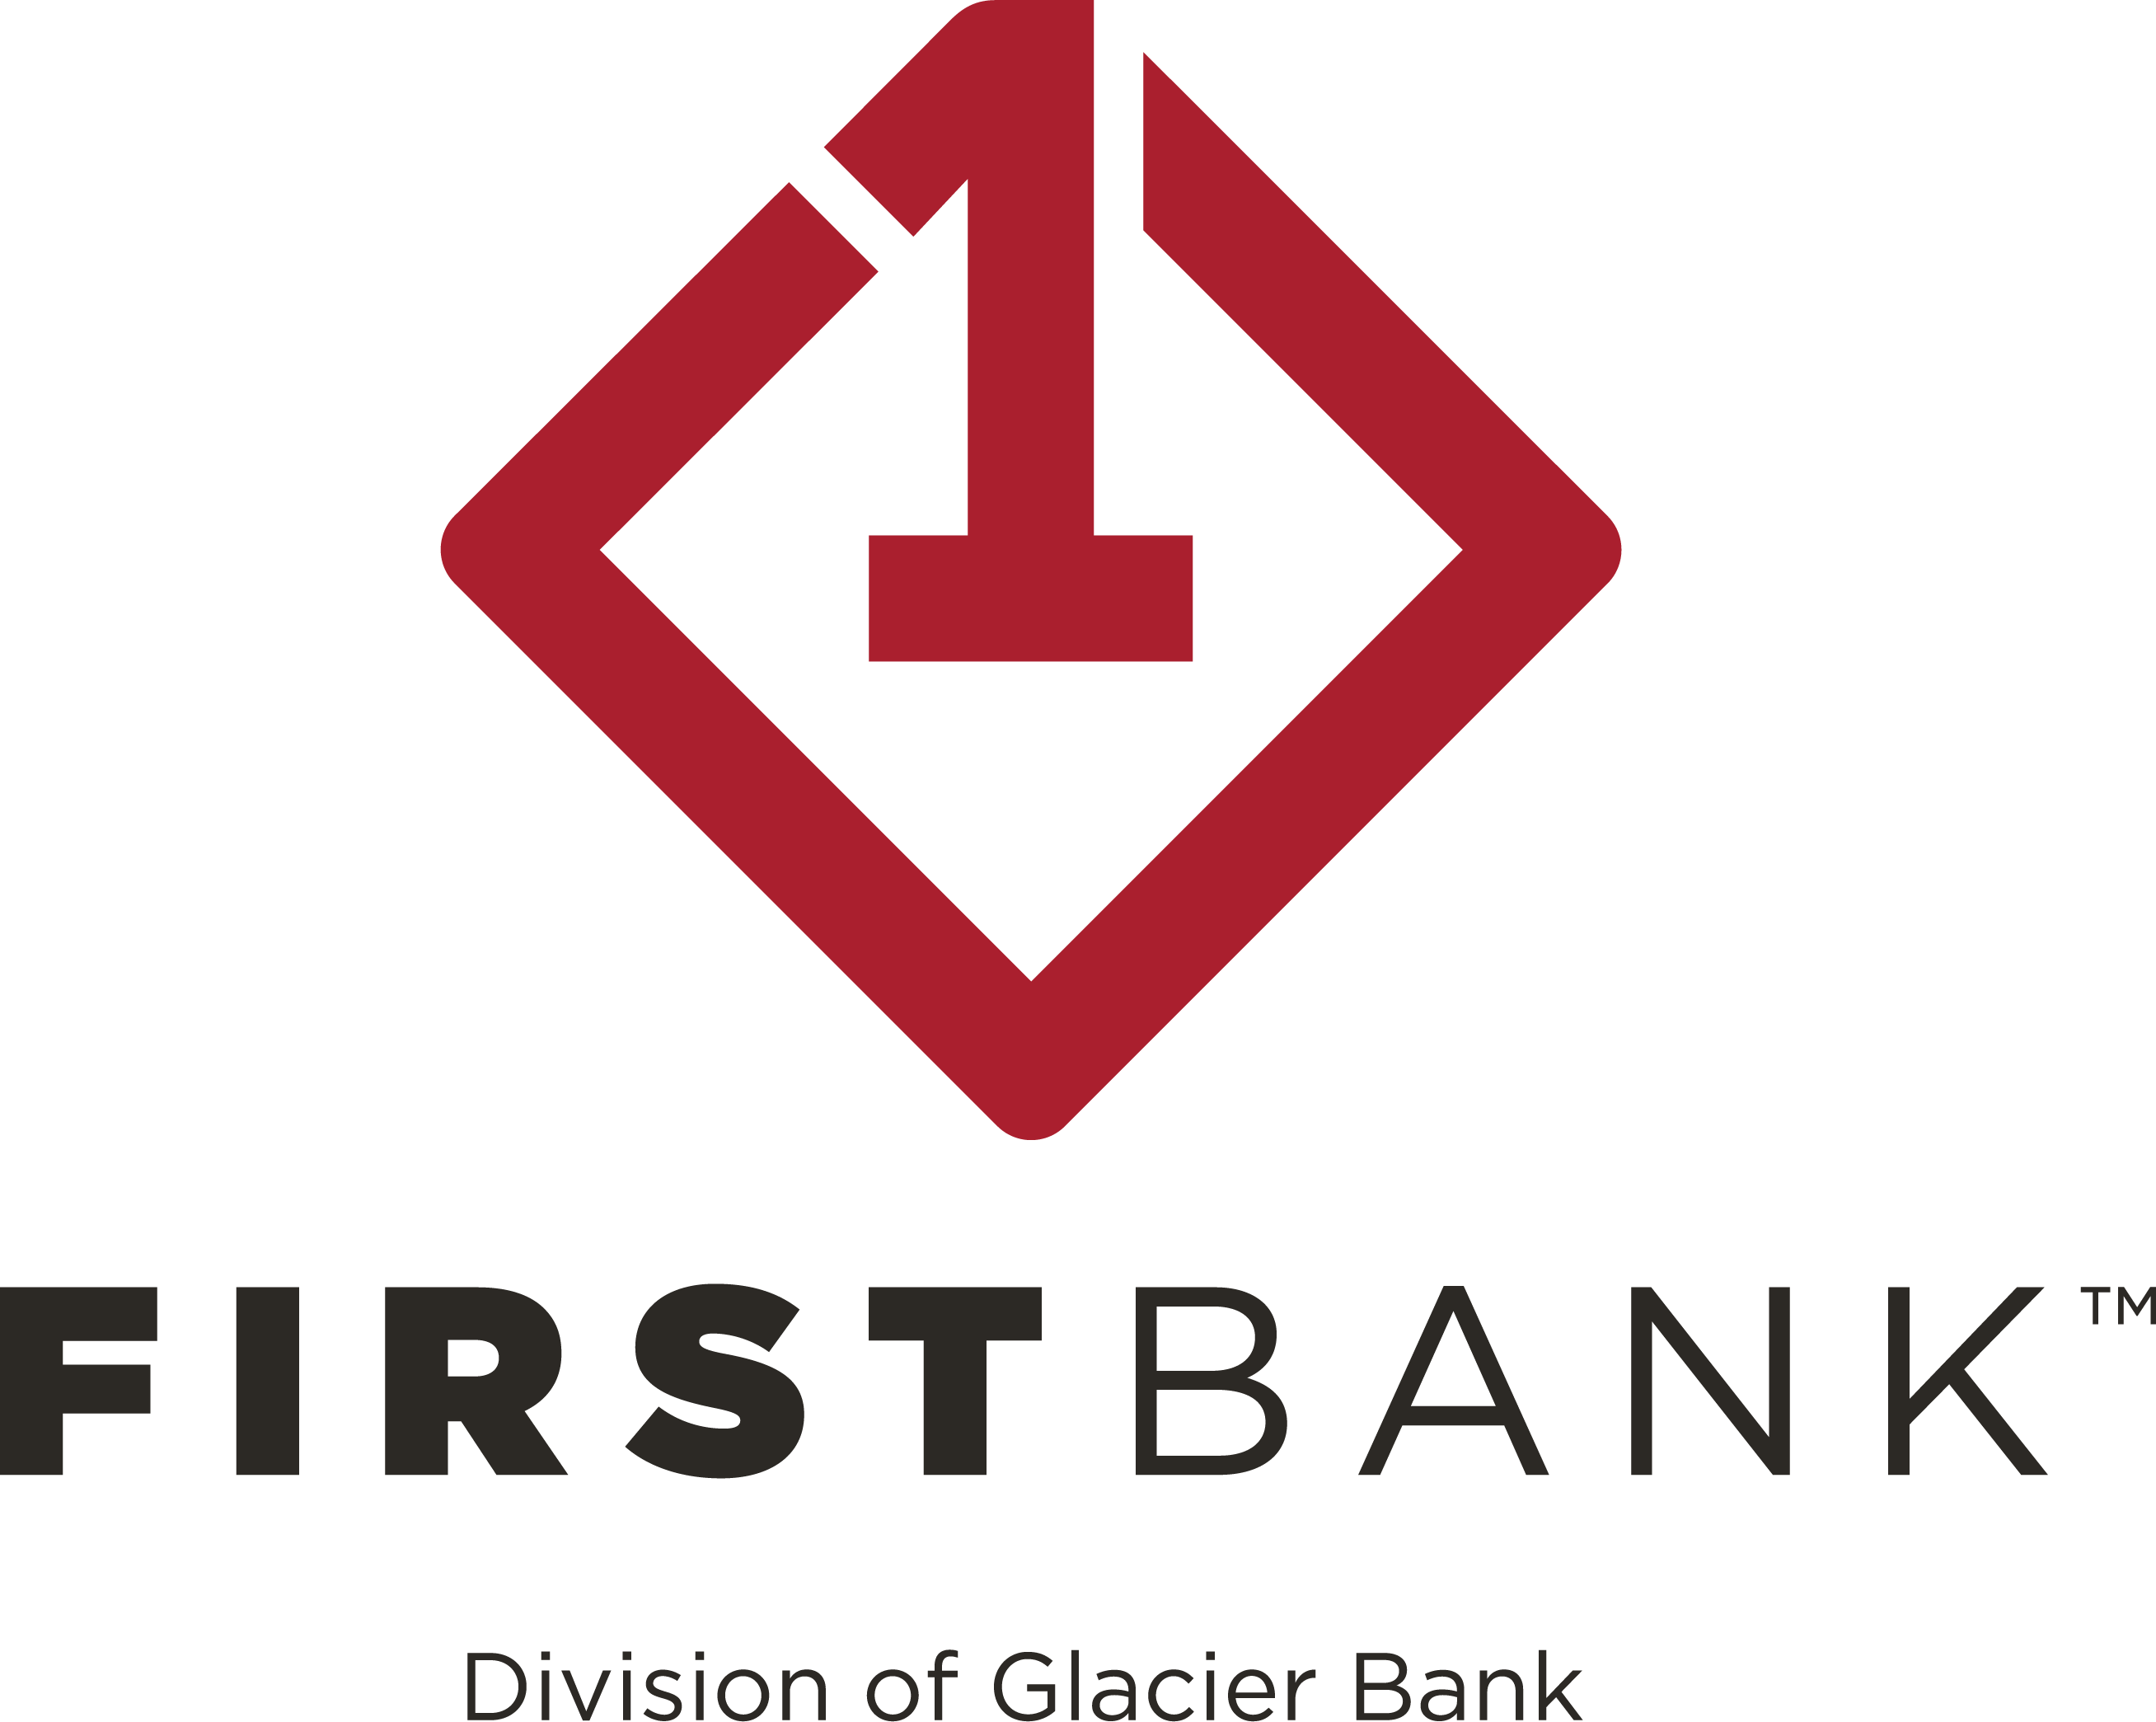 First Bank - a Division of Glacier Bank